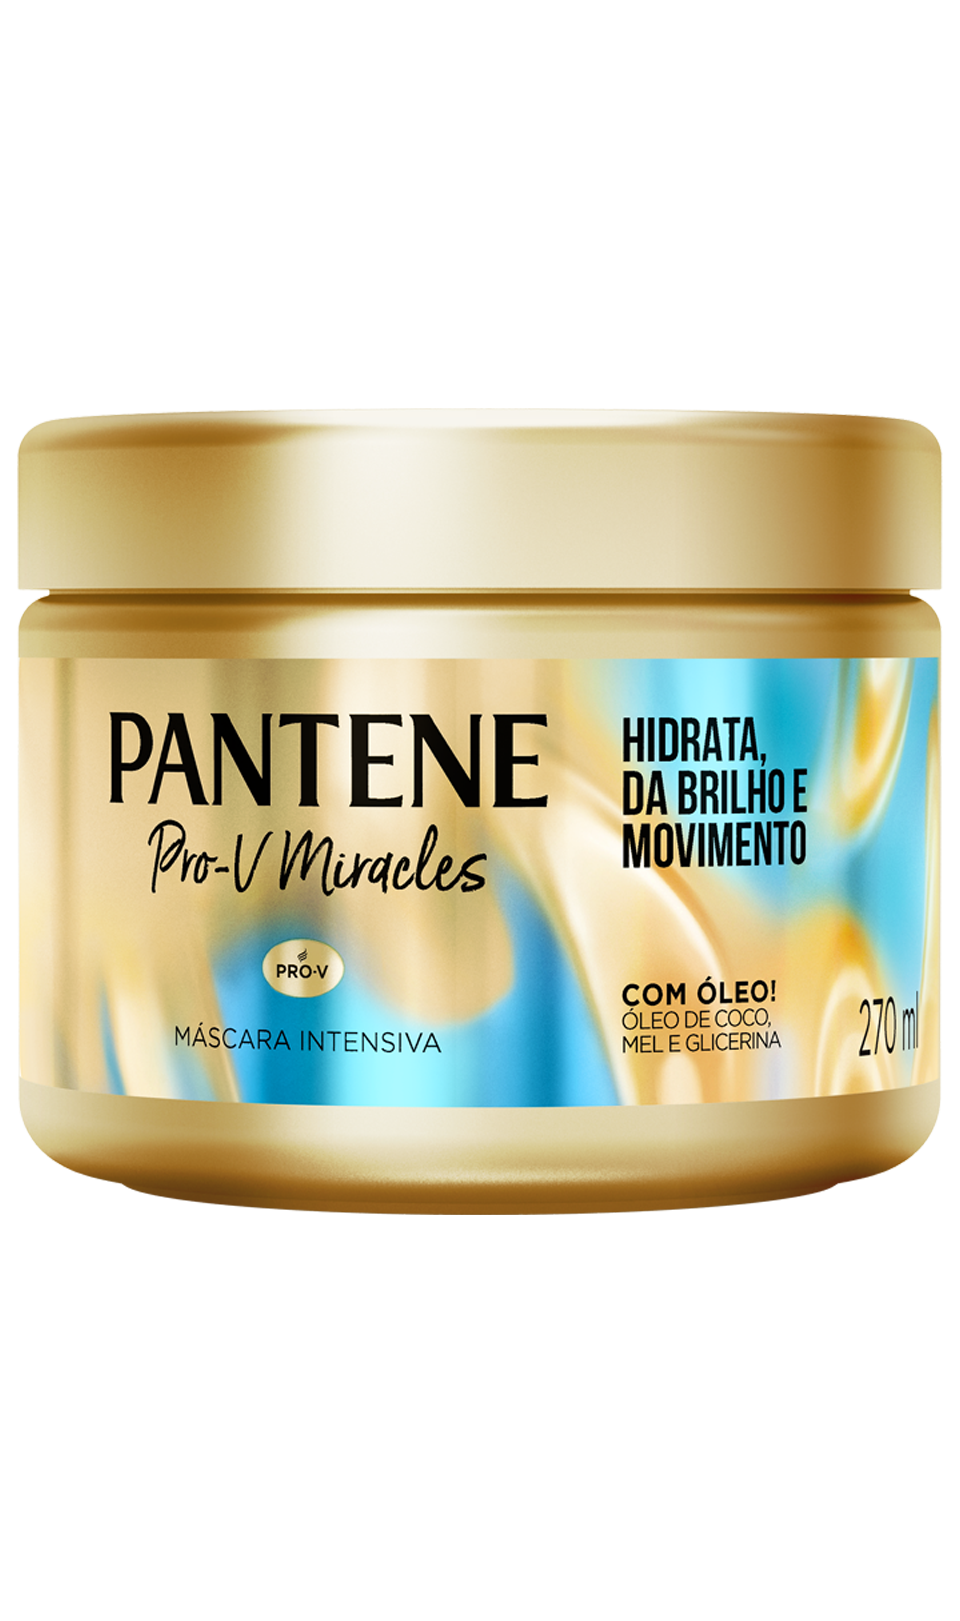 Máscara intensiva capilar hidratante com óleo de coco, mel e glicerina para o cabelo da Pantene